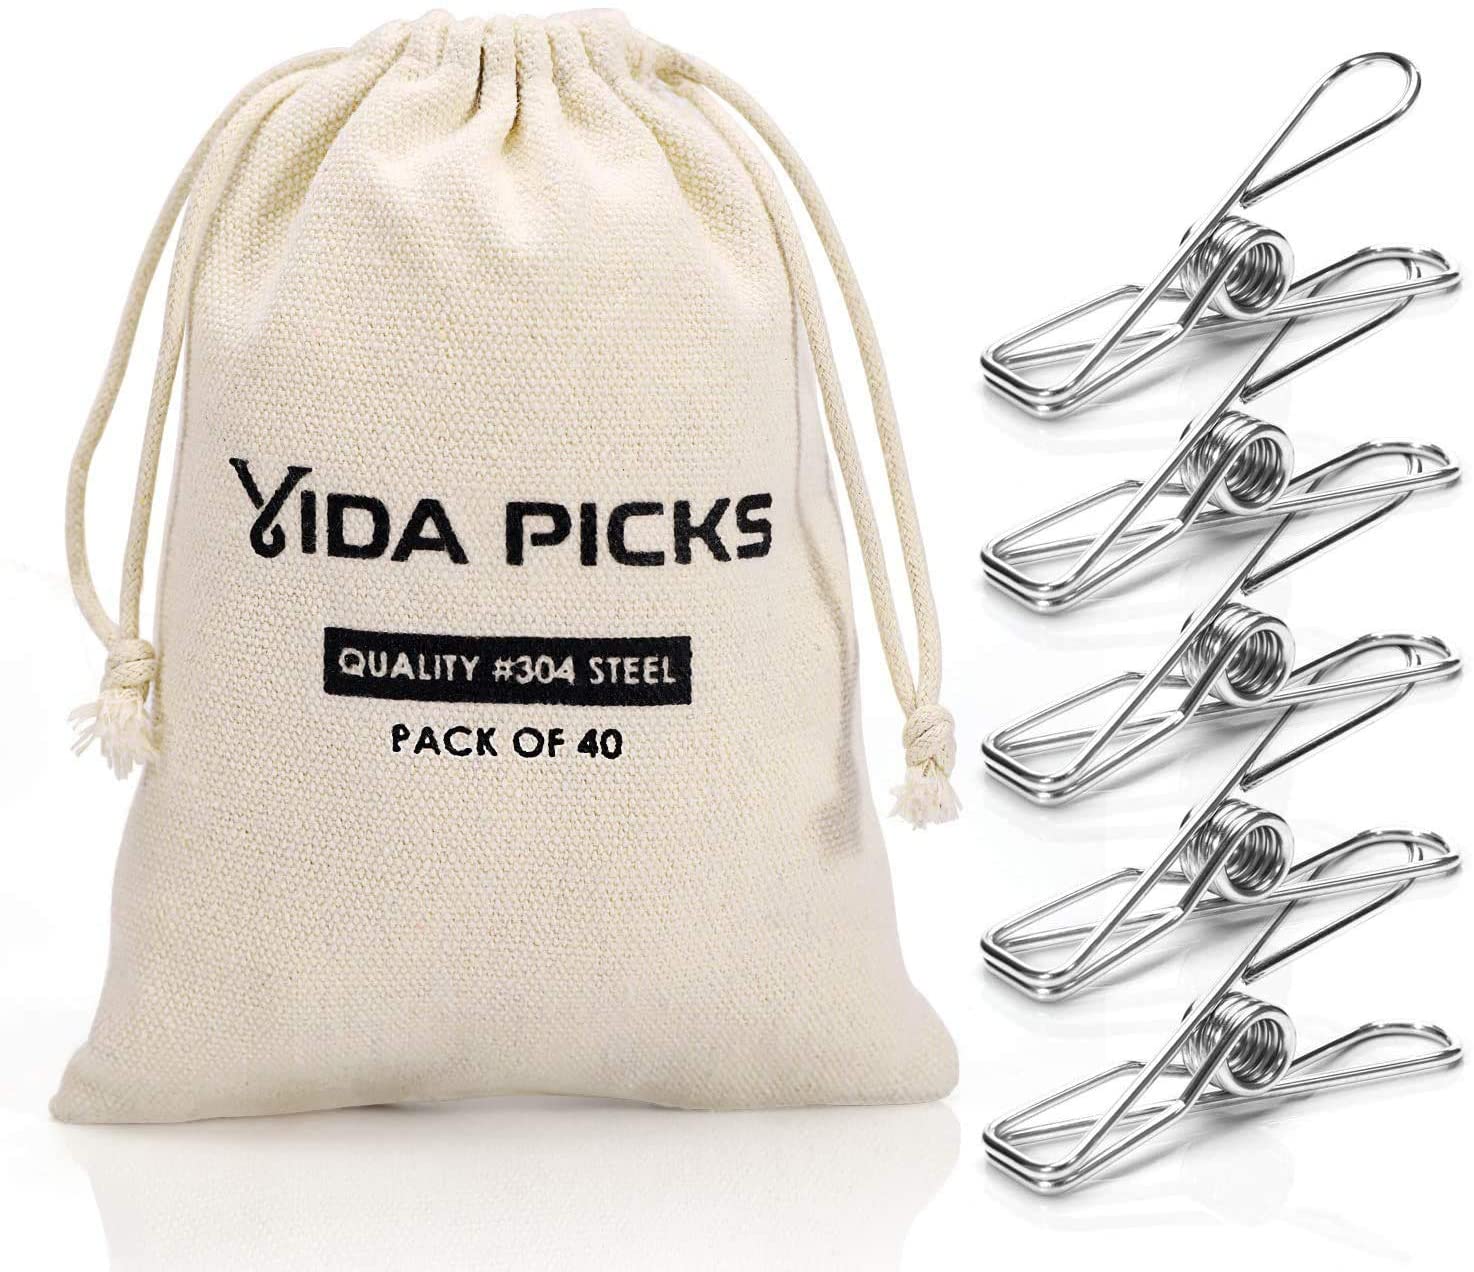 Vida Picks Multipurpose Wire Clothespins, 40-Count